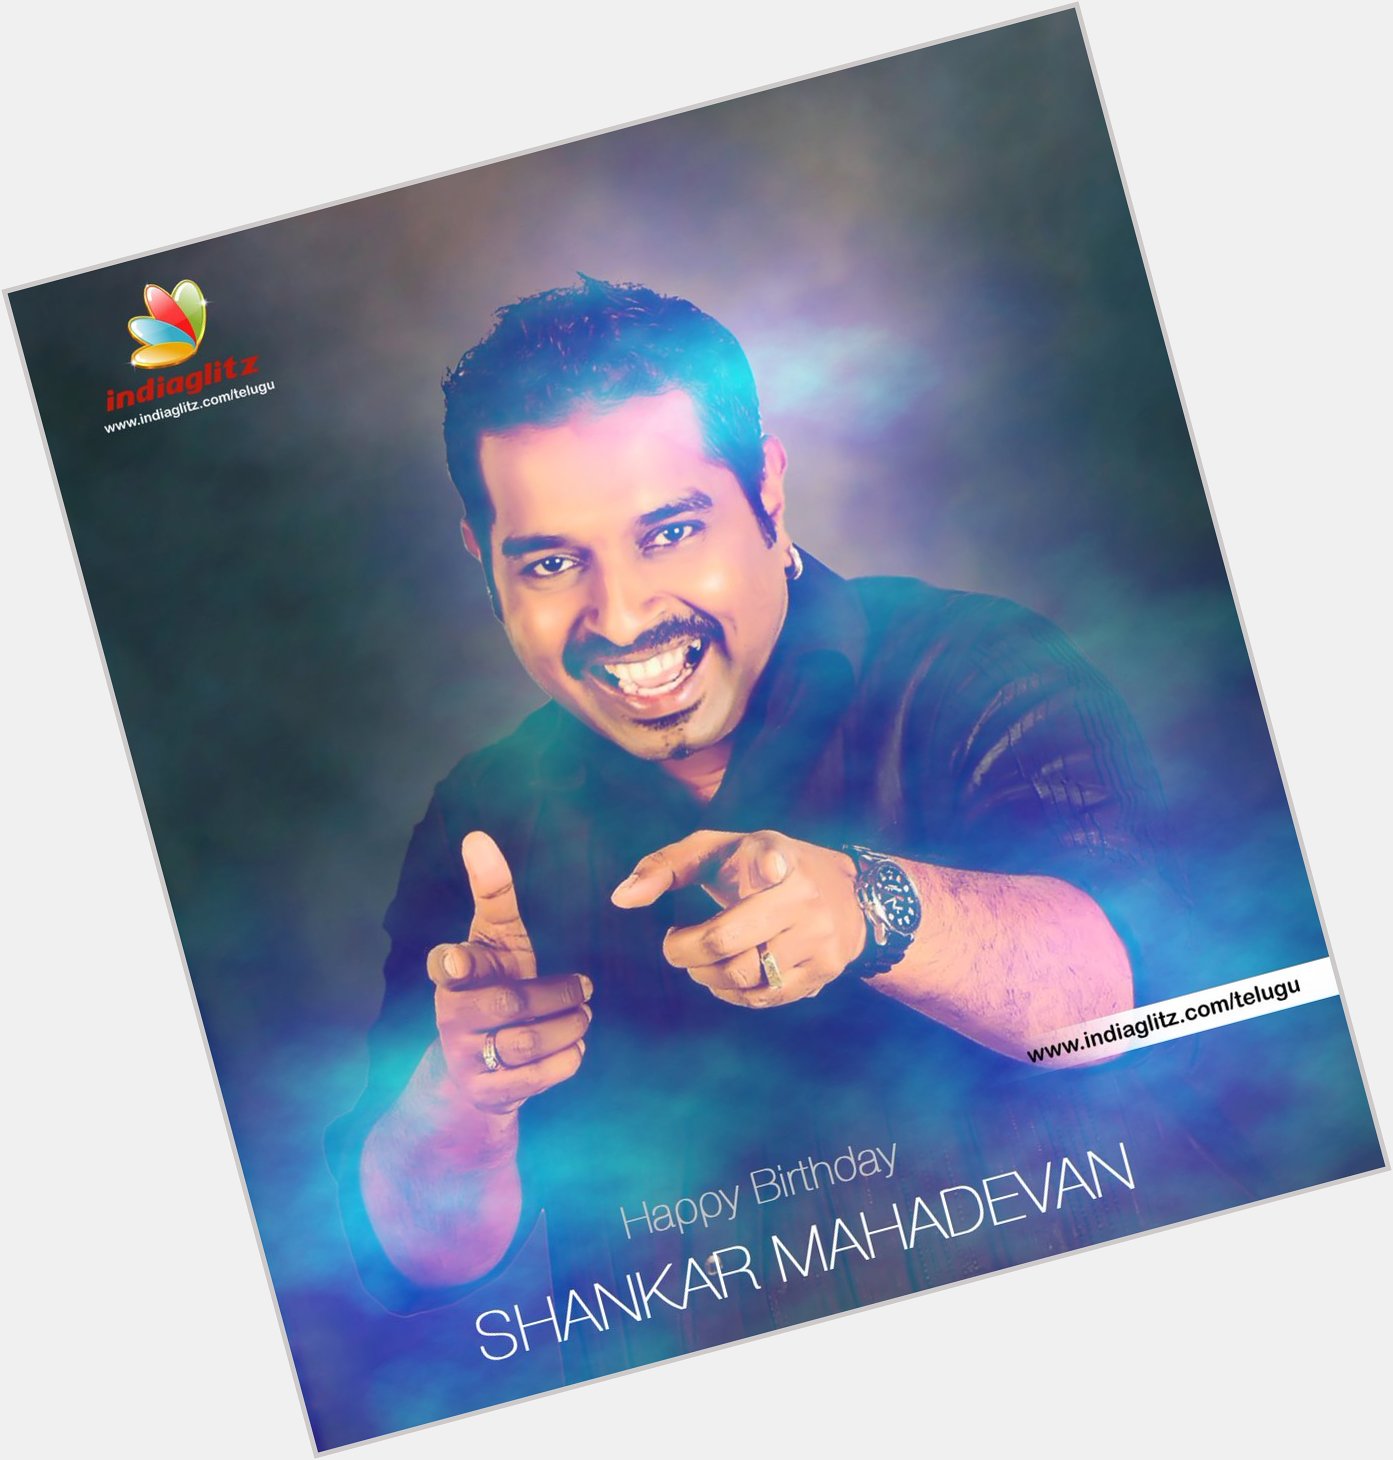 Wishing Shankar_Live a very happy birthday 

Listen to his super hit Telugu songs here -->  